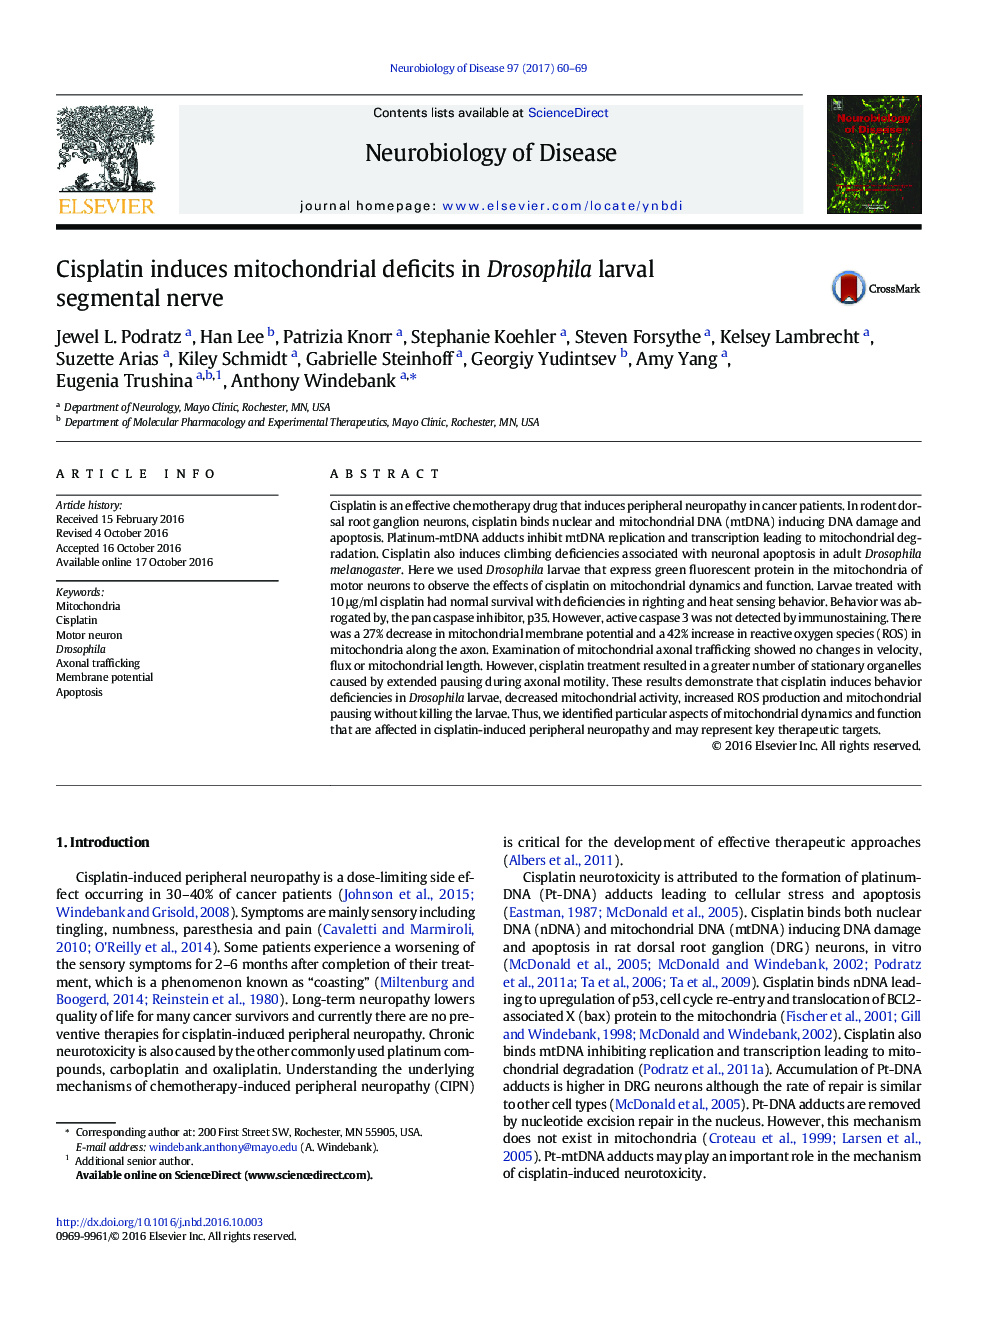 Cisplatin induces mitochondrial deficits in Drosophila larval segmental nerve